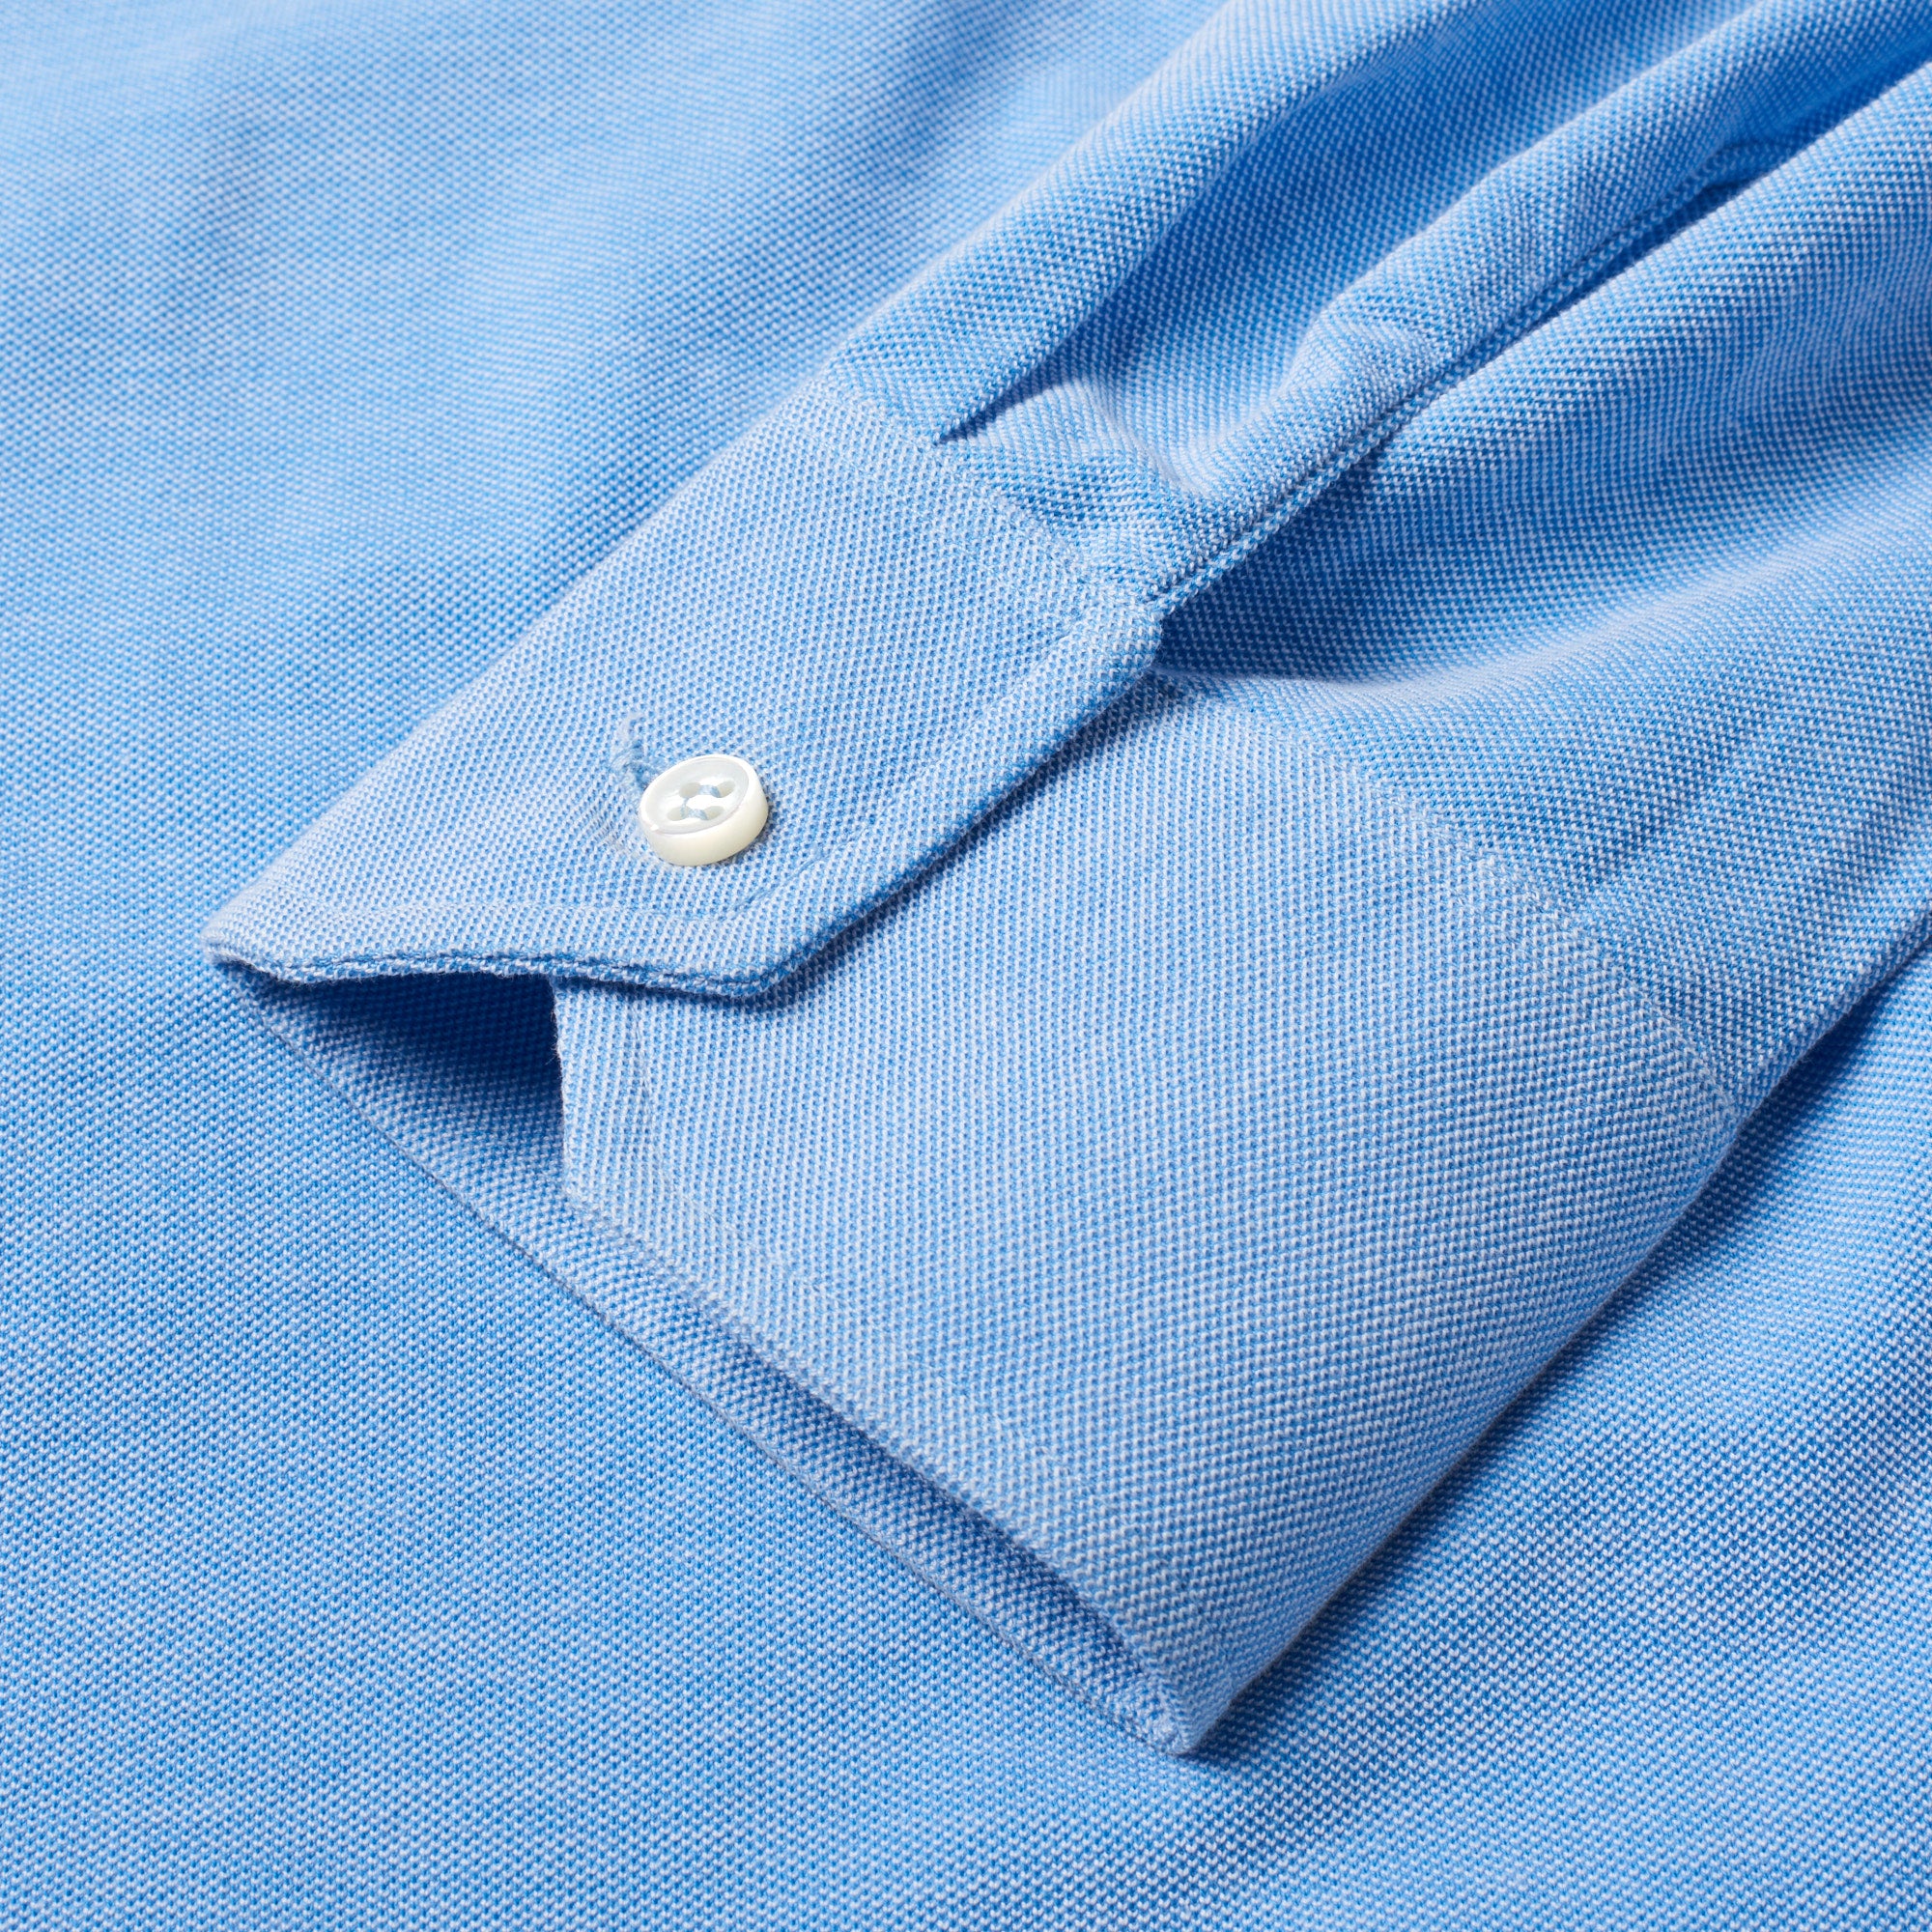 M.BARDELLI Milano Solid Light Blue Oxford Cotton 1 Pocket Casual Shirt Size L